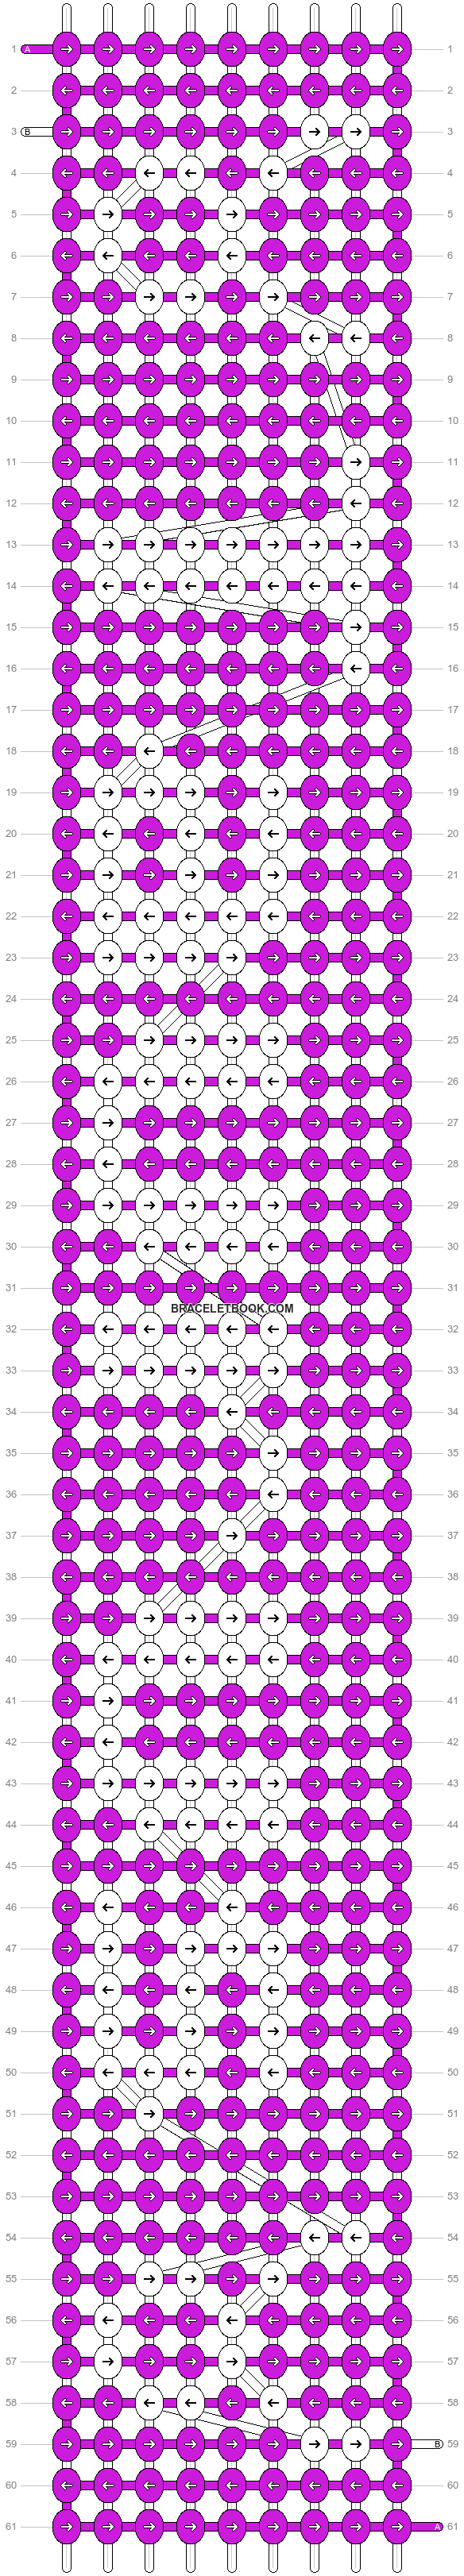 Alpha pattern #6172 variation #35135 pattern